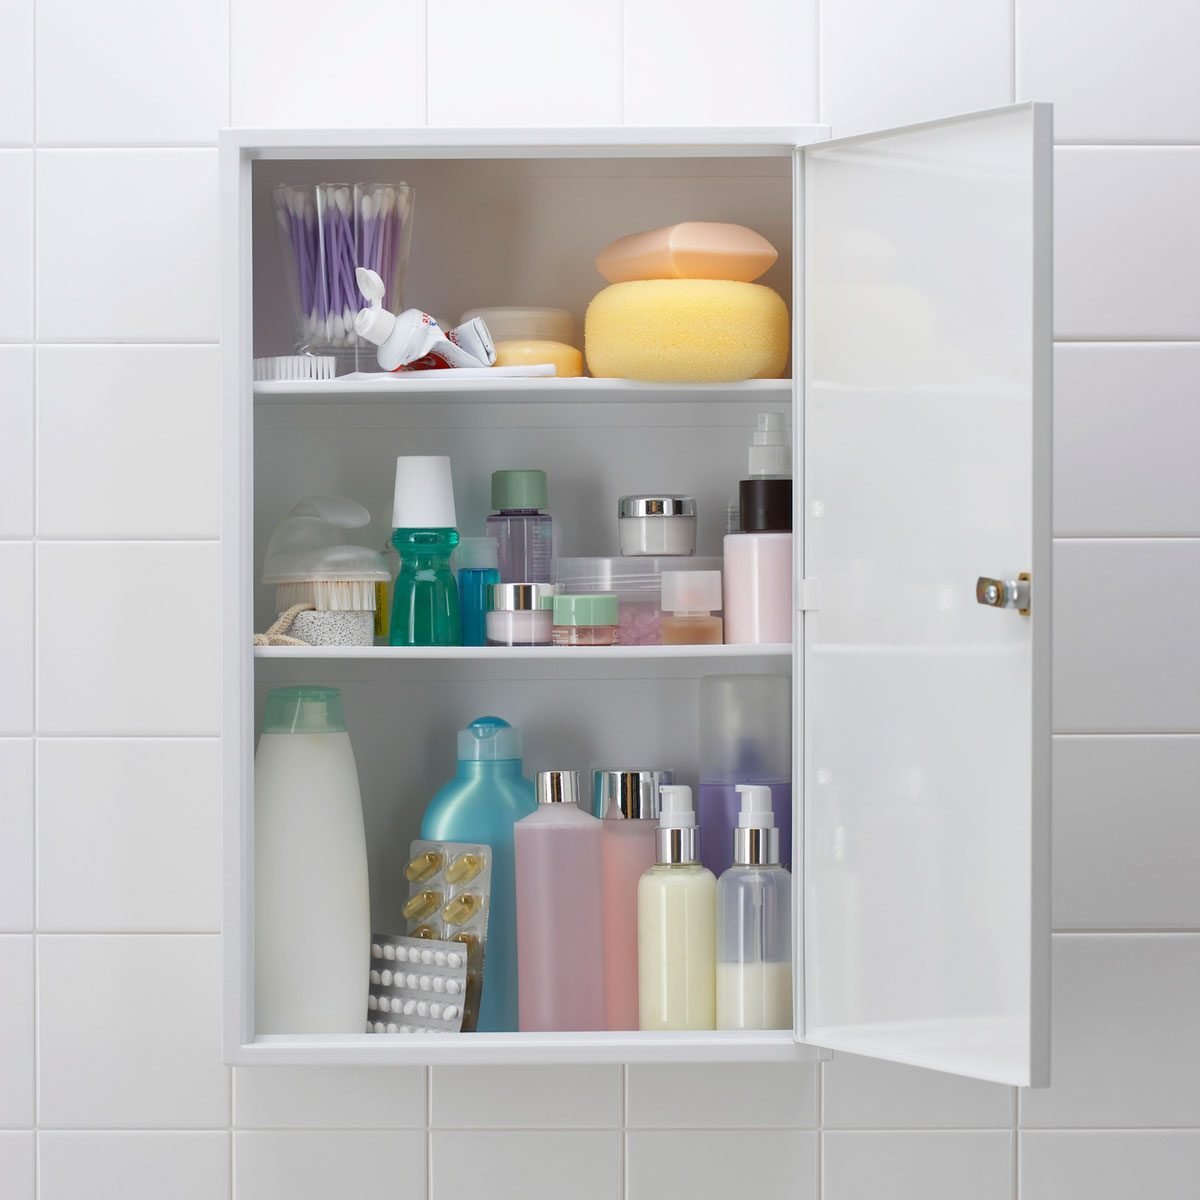 Bathroom Cabinet Organizers: 10 Ideas for Storage